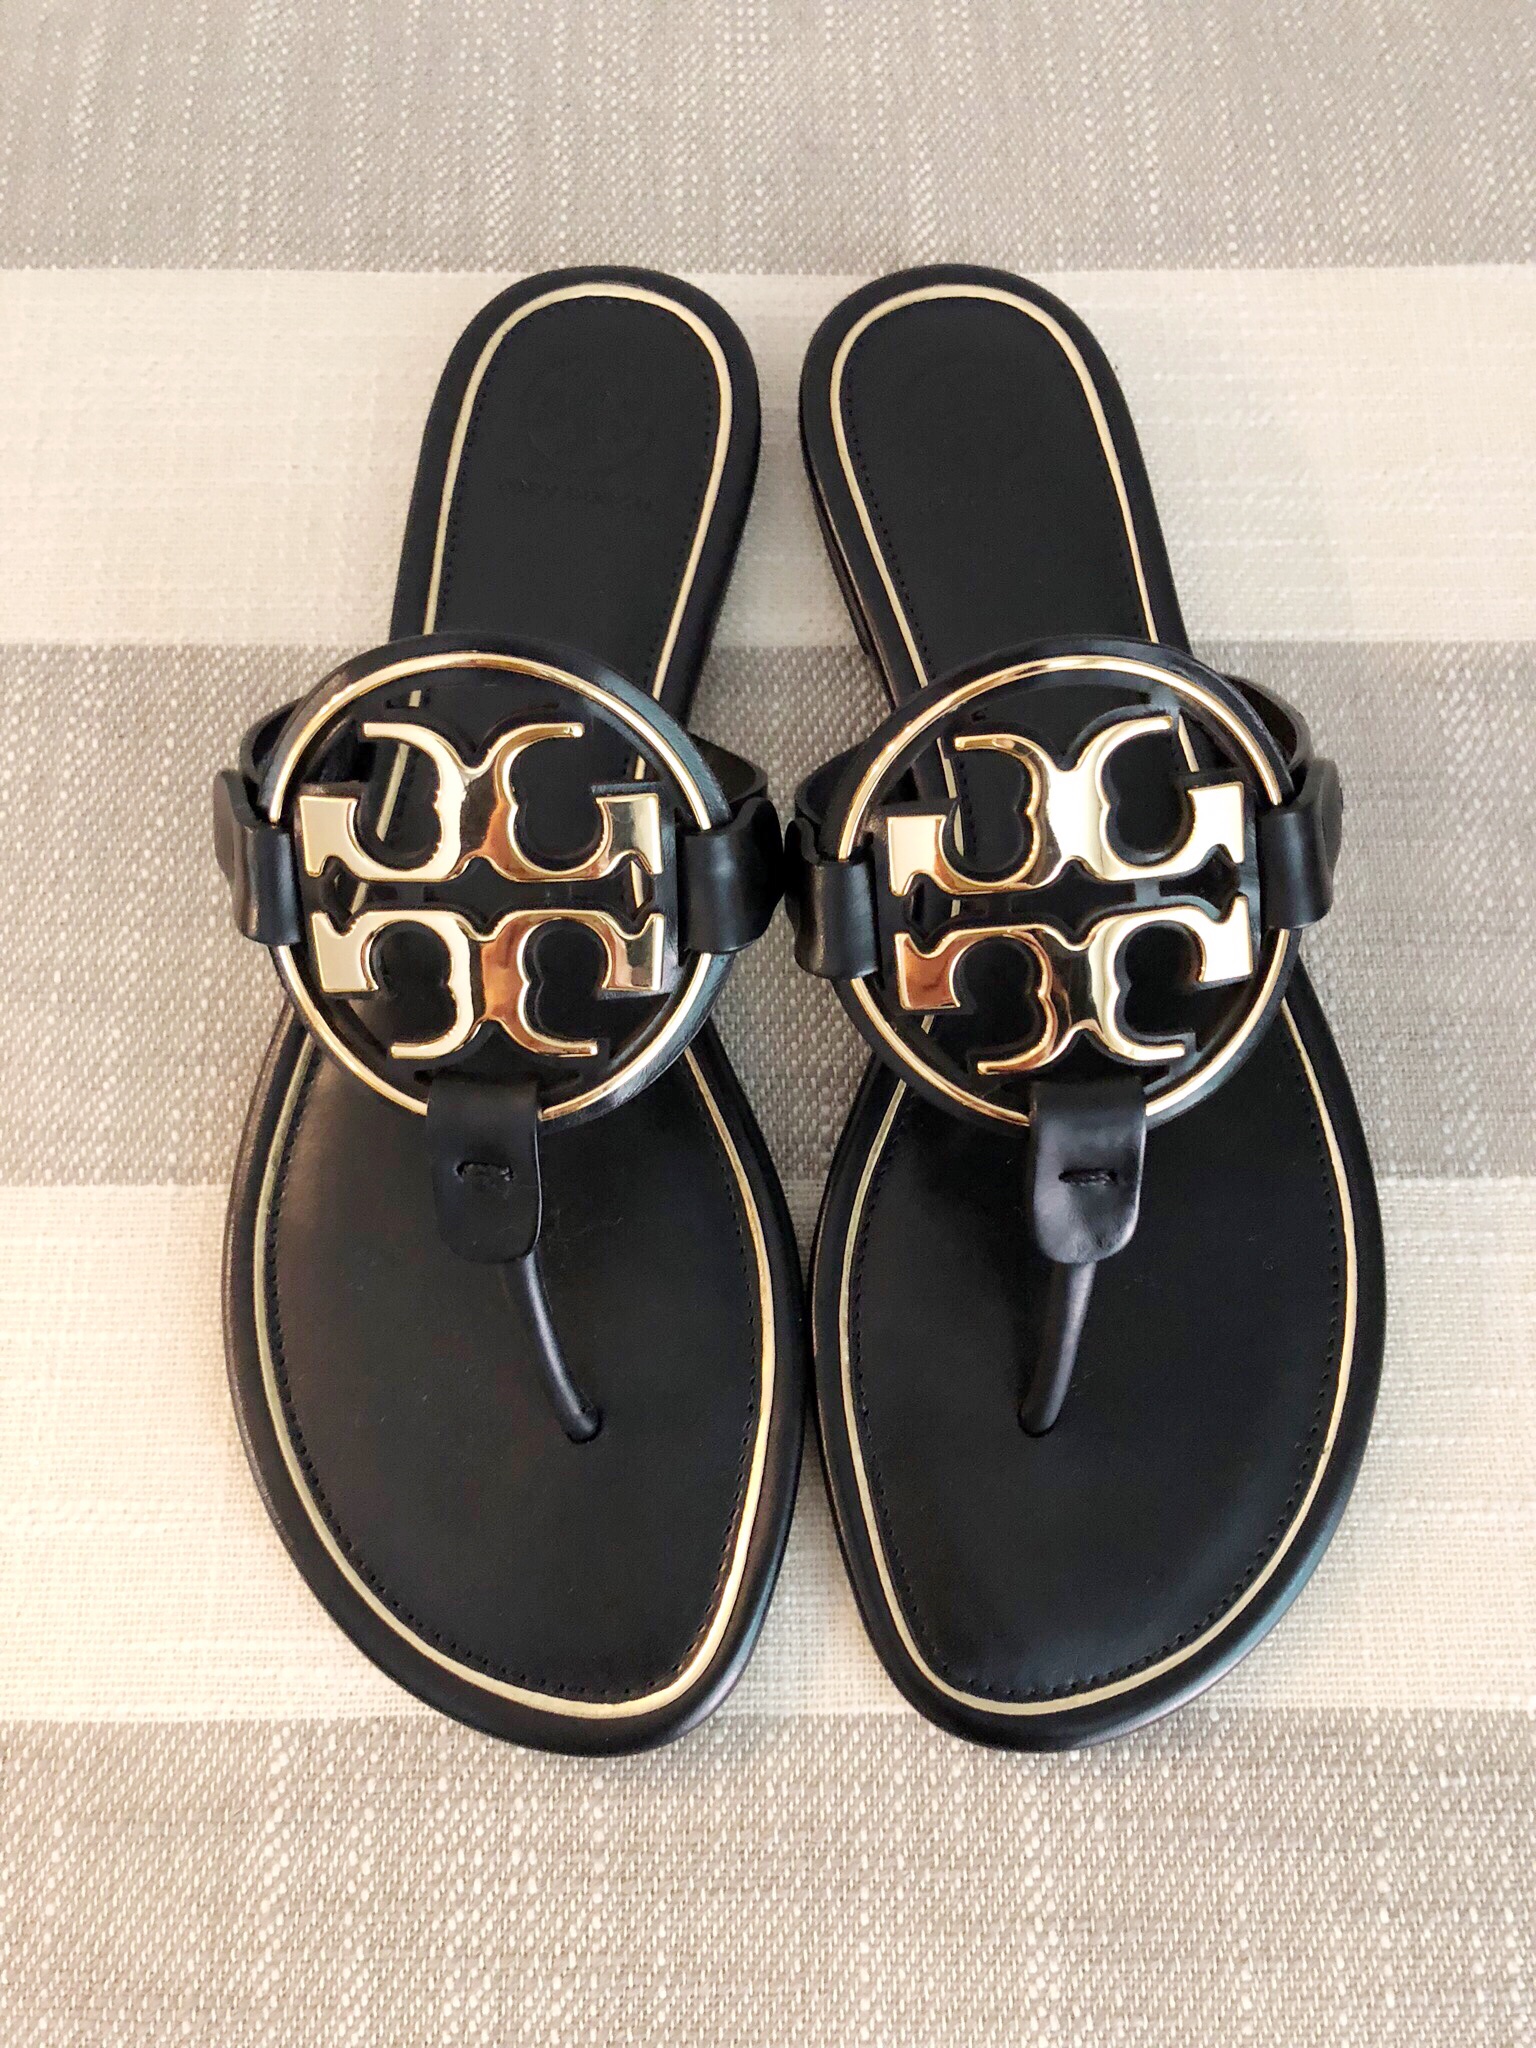 tory-burch-miller-metal-logo-new-sandals-promo